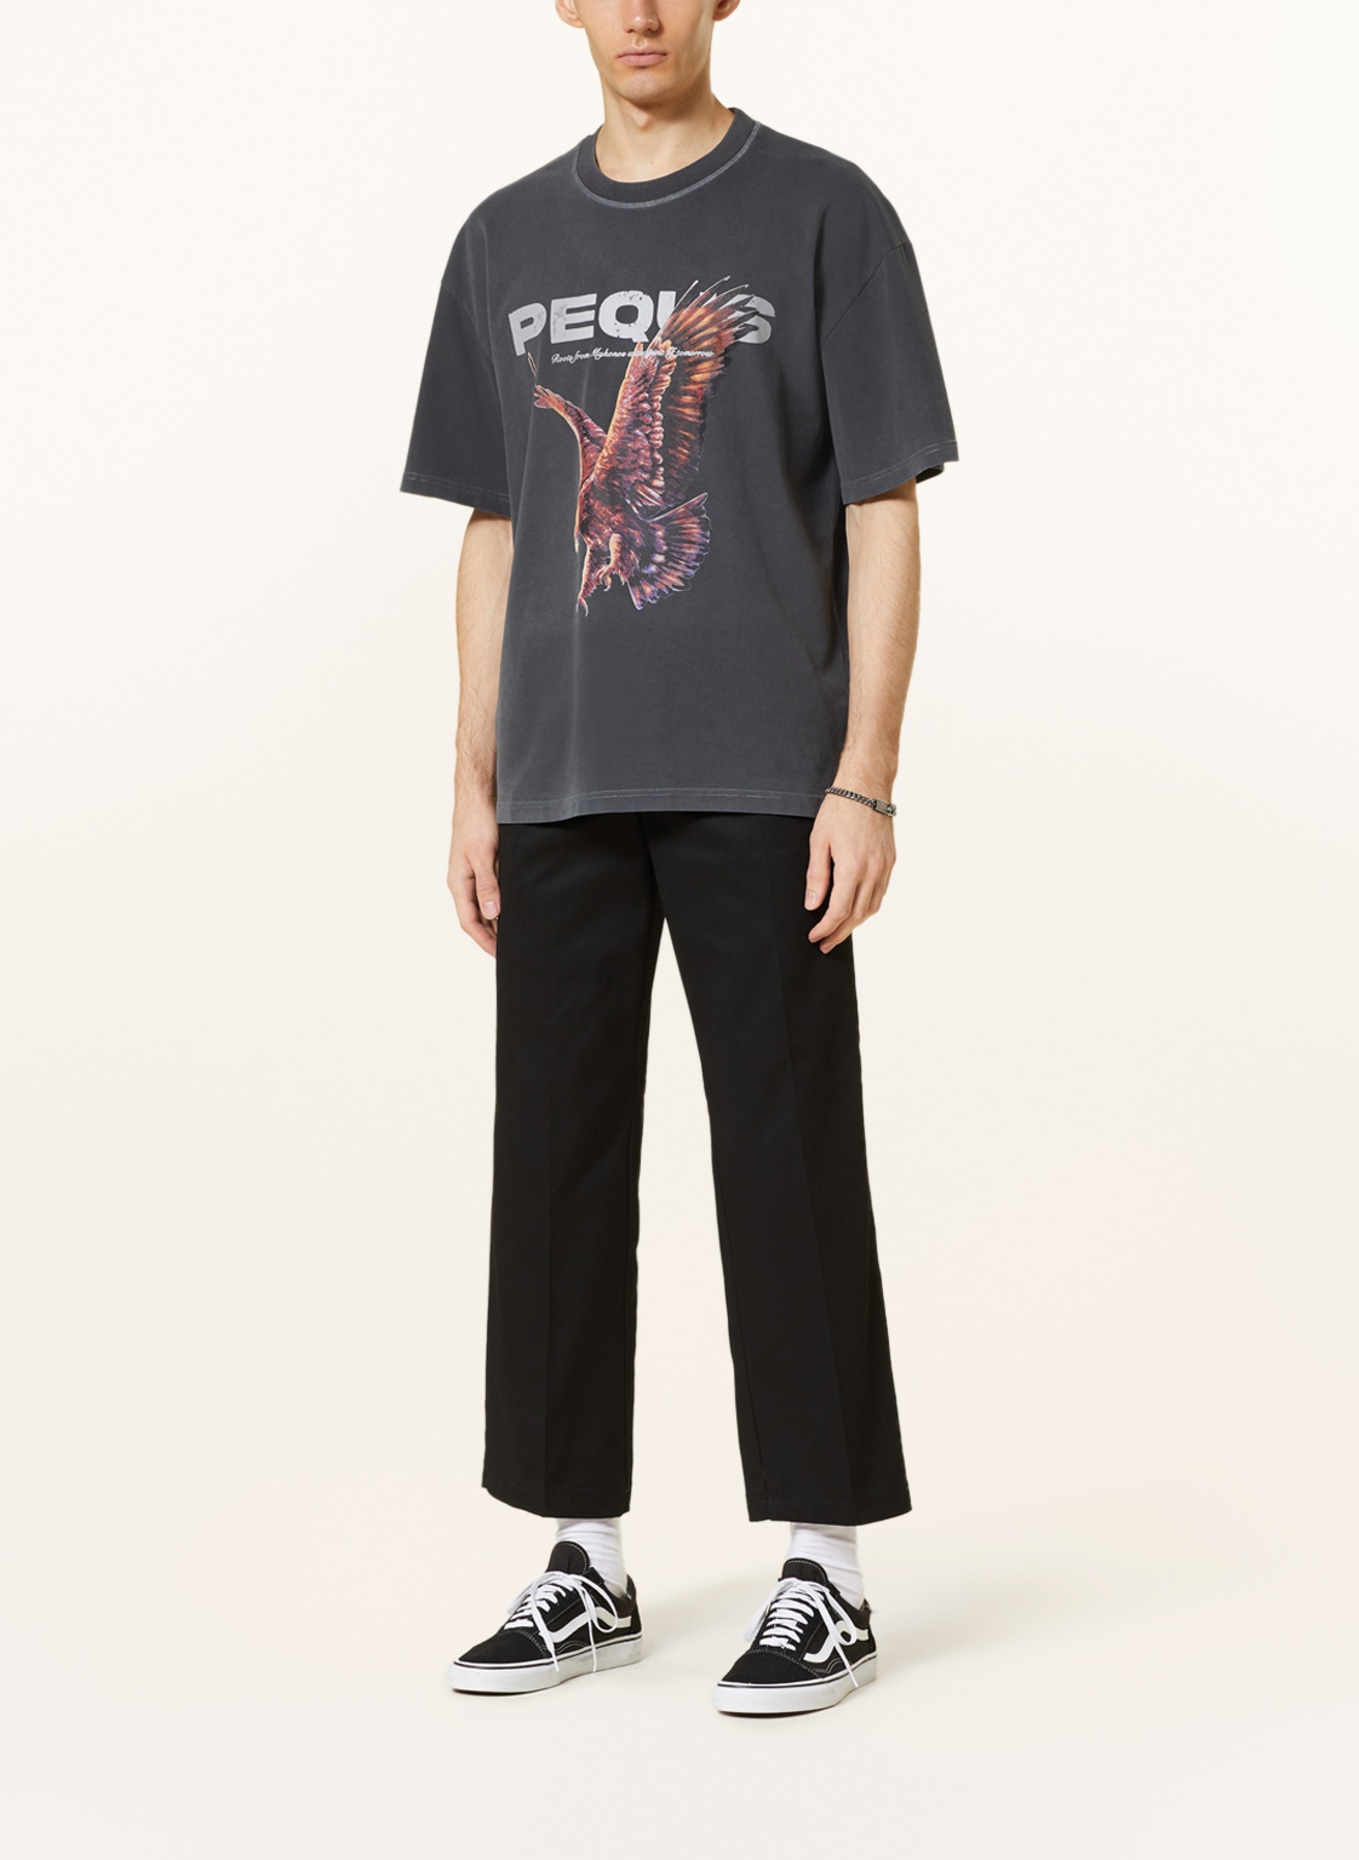 PEQUS T-shirt, Color: GRAY/ LIGHT GRAY/ BLACK (Image 2)